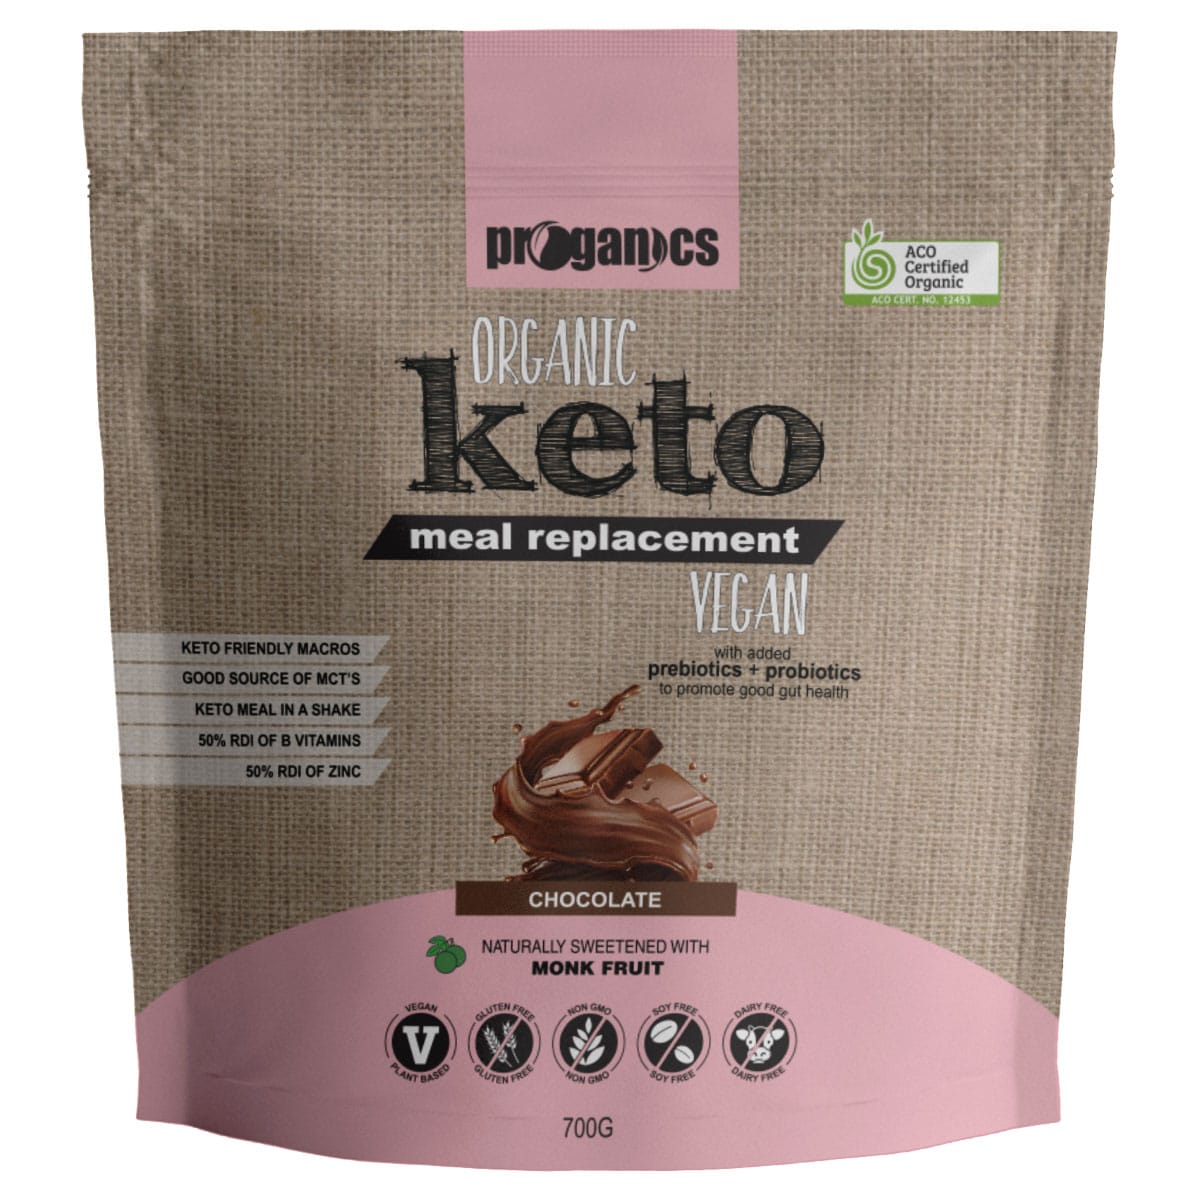 Proganics Organic Keto Meal Replacement Chocolate 700g Australia